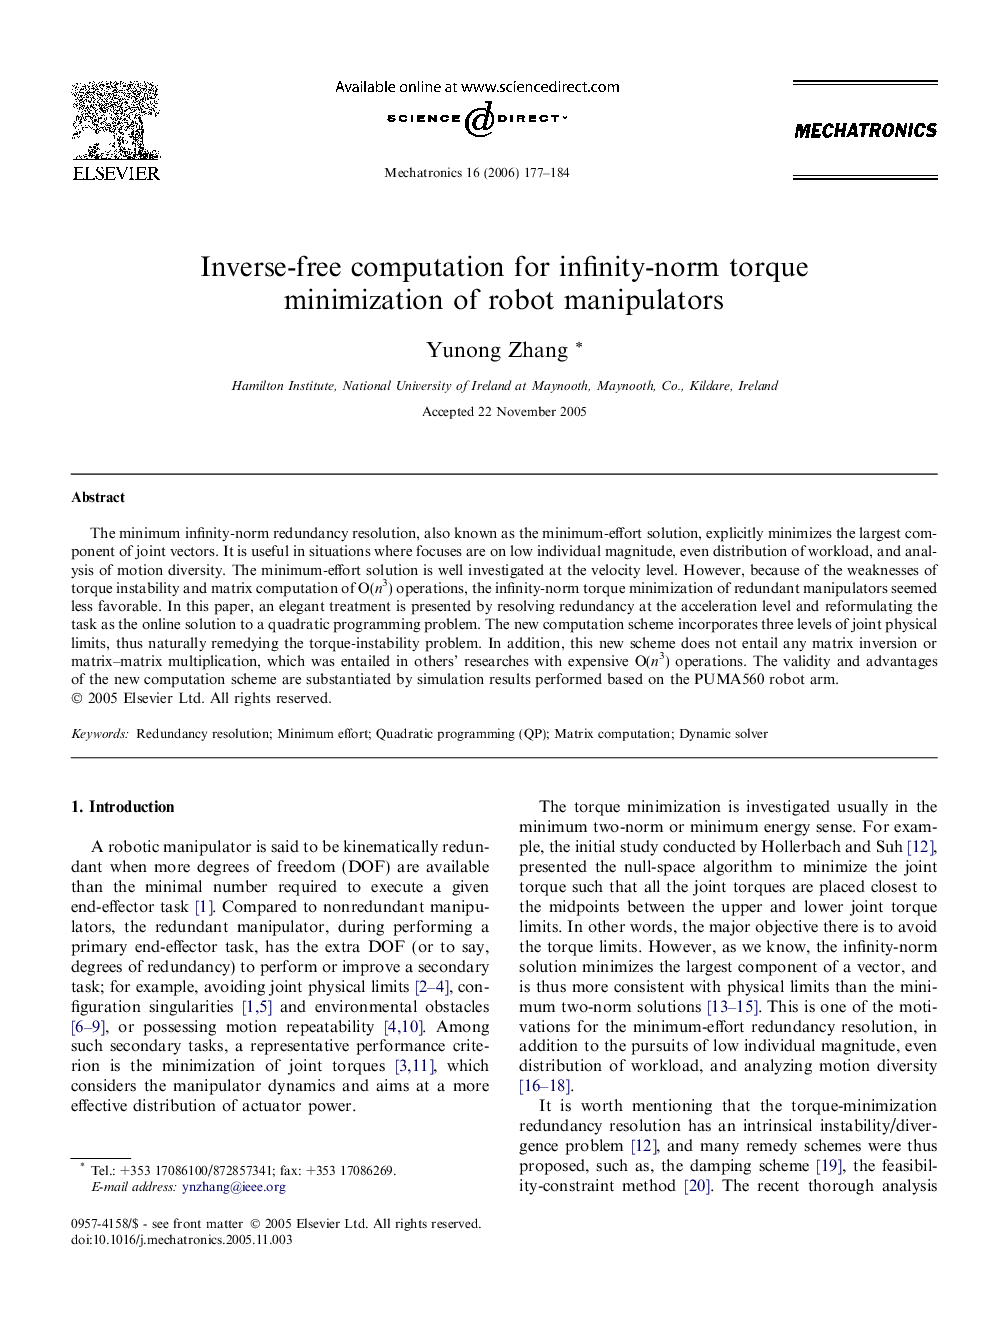 Inverse-free computation for infinity-norm torque minimization of robot manipulators